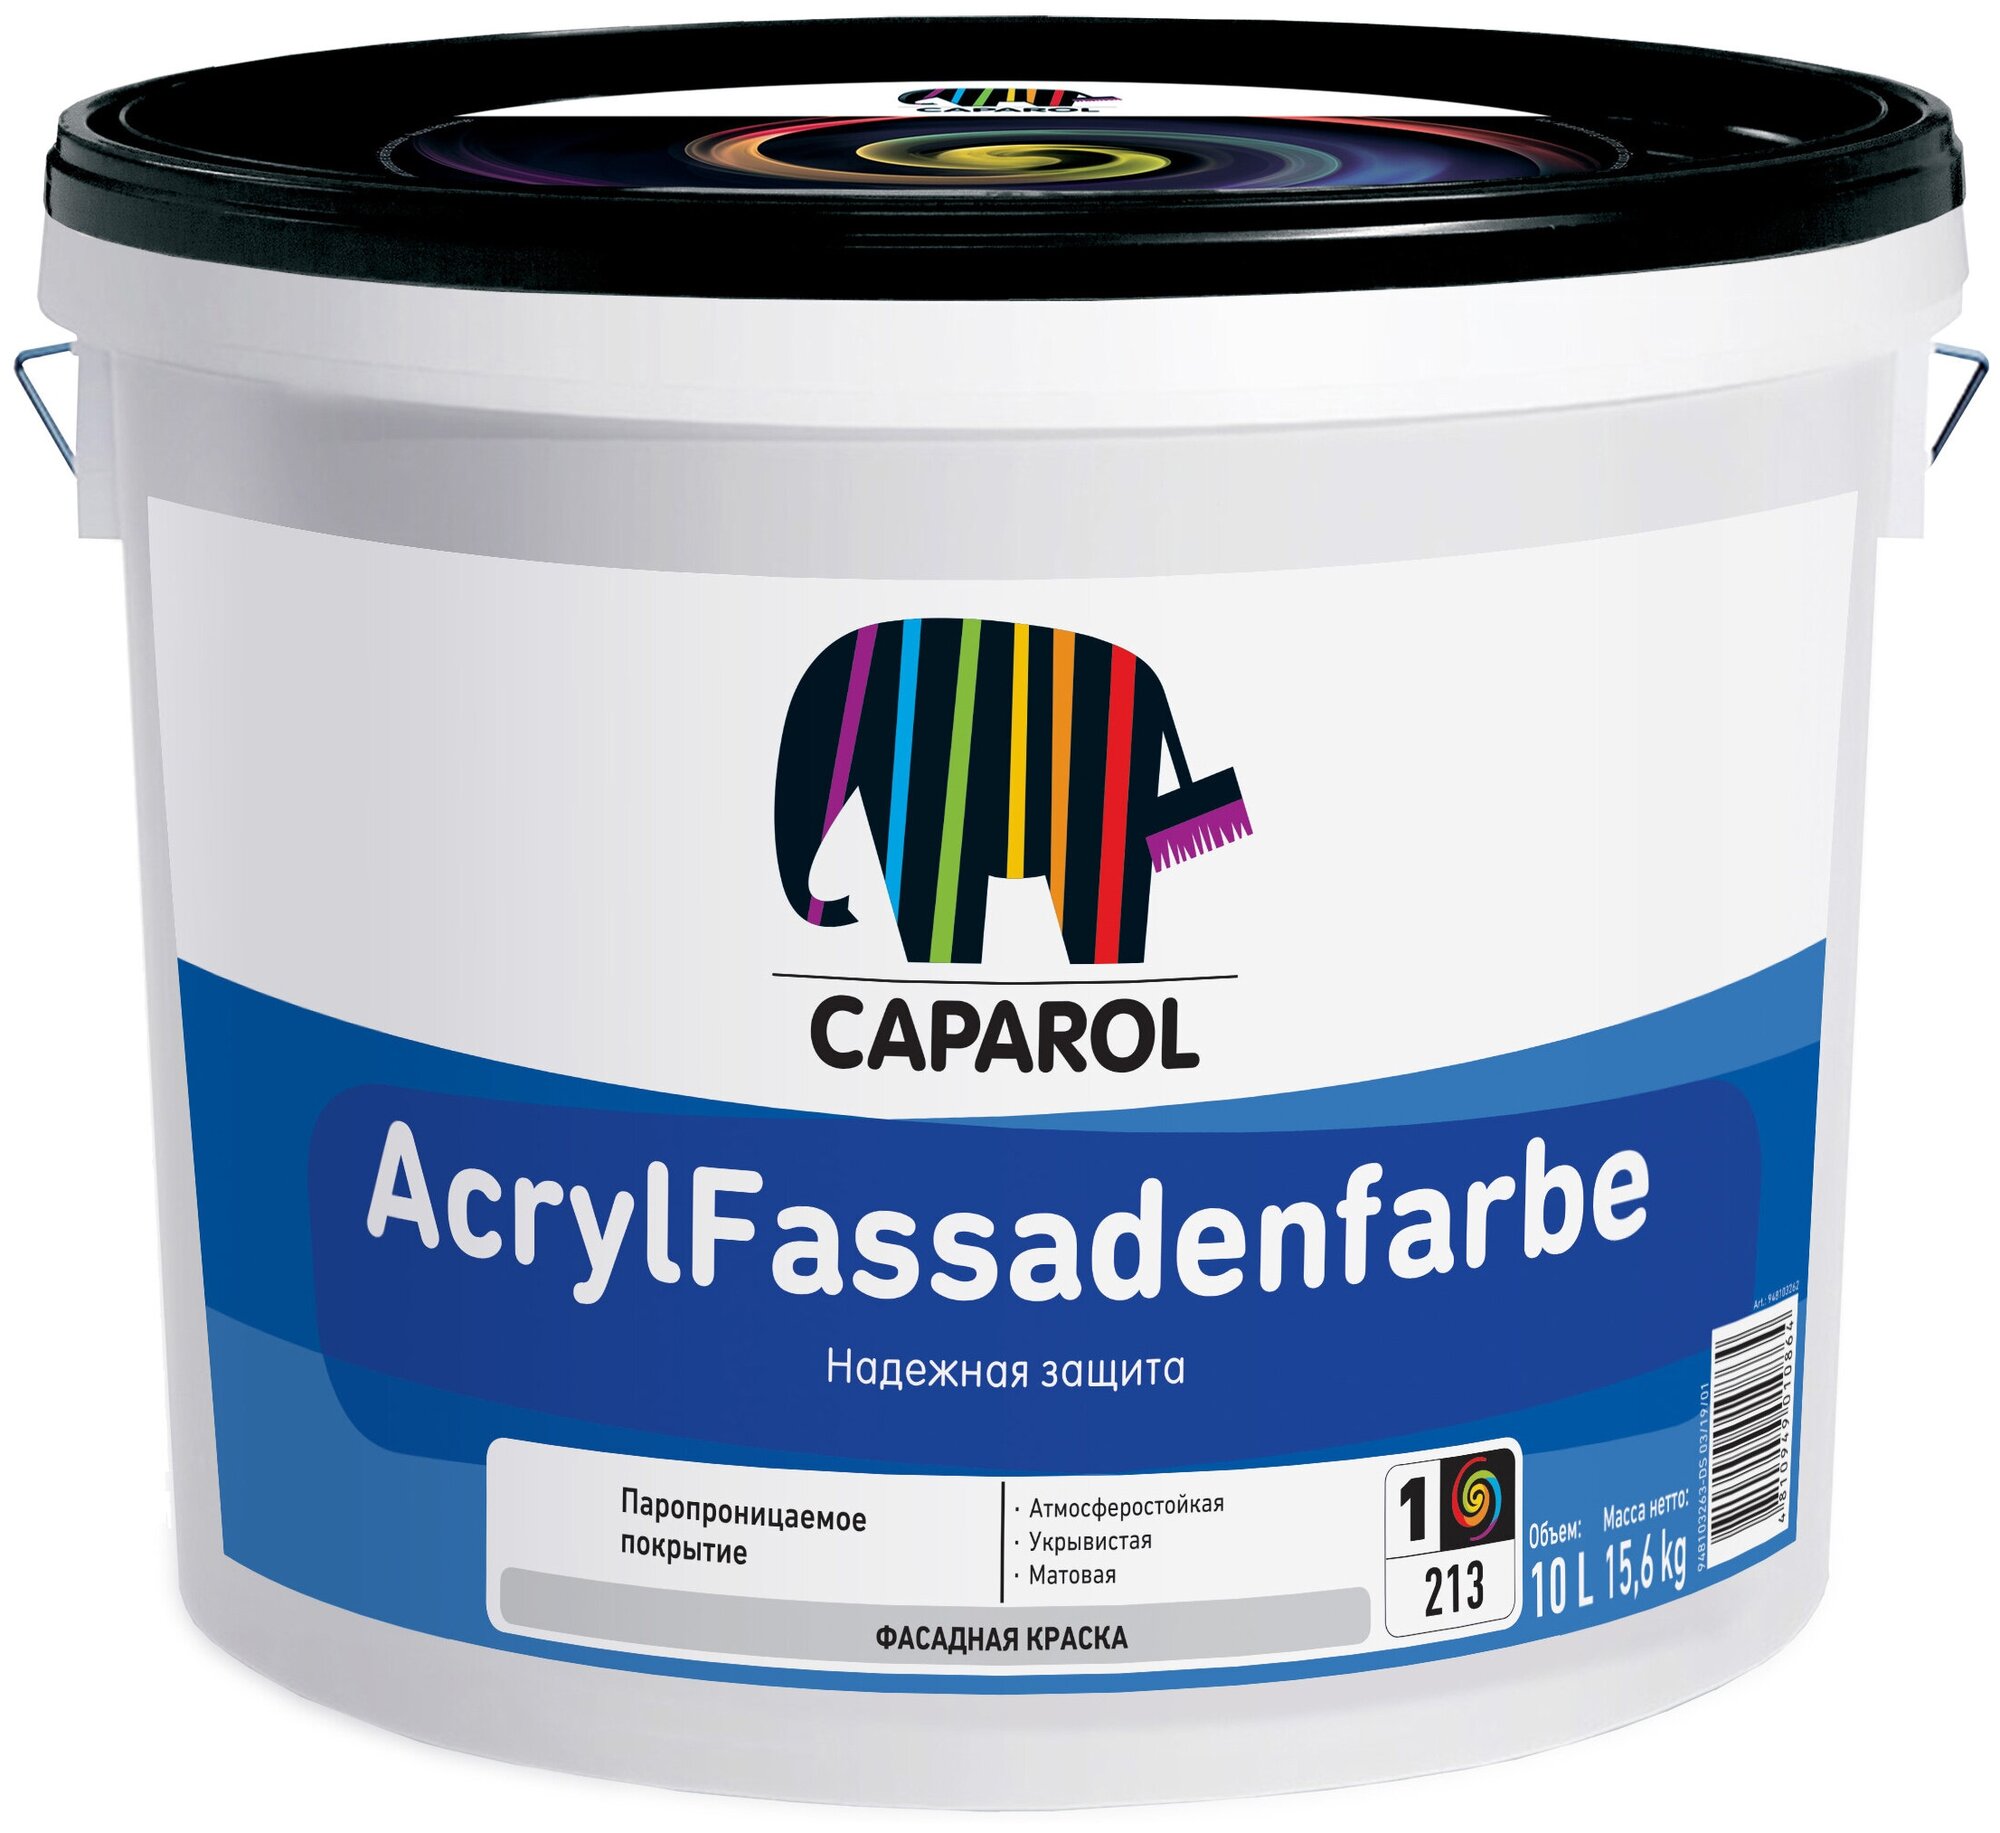 Caparol ACRYL FASSADENFARBE Pro краска фасадная водоразбавляемая, матовая, база 1 (10л) 948104965